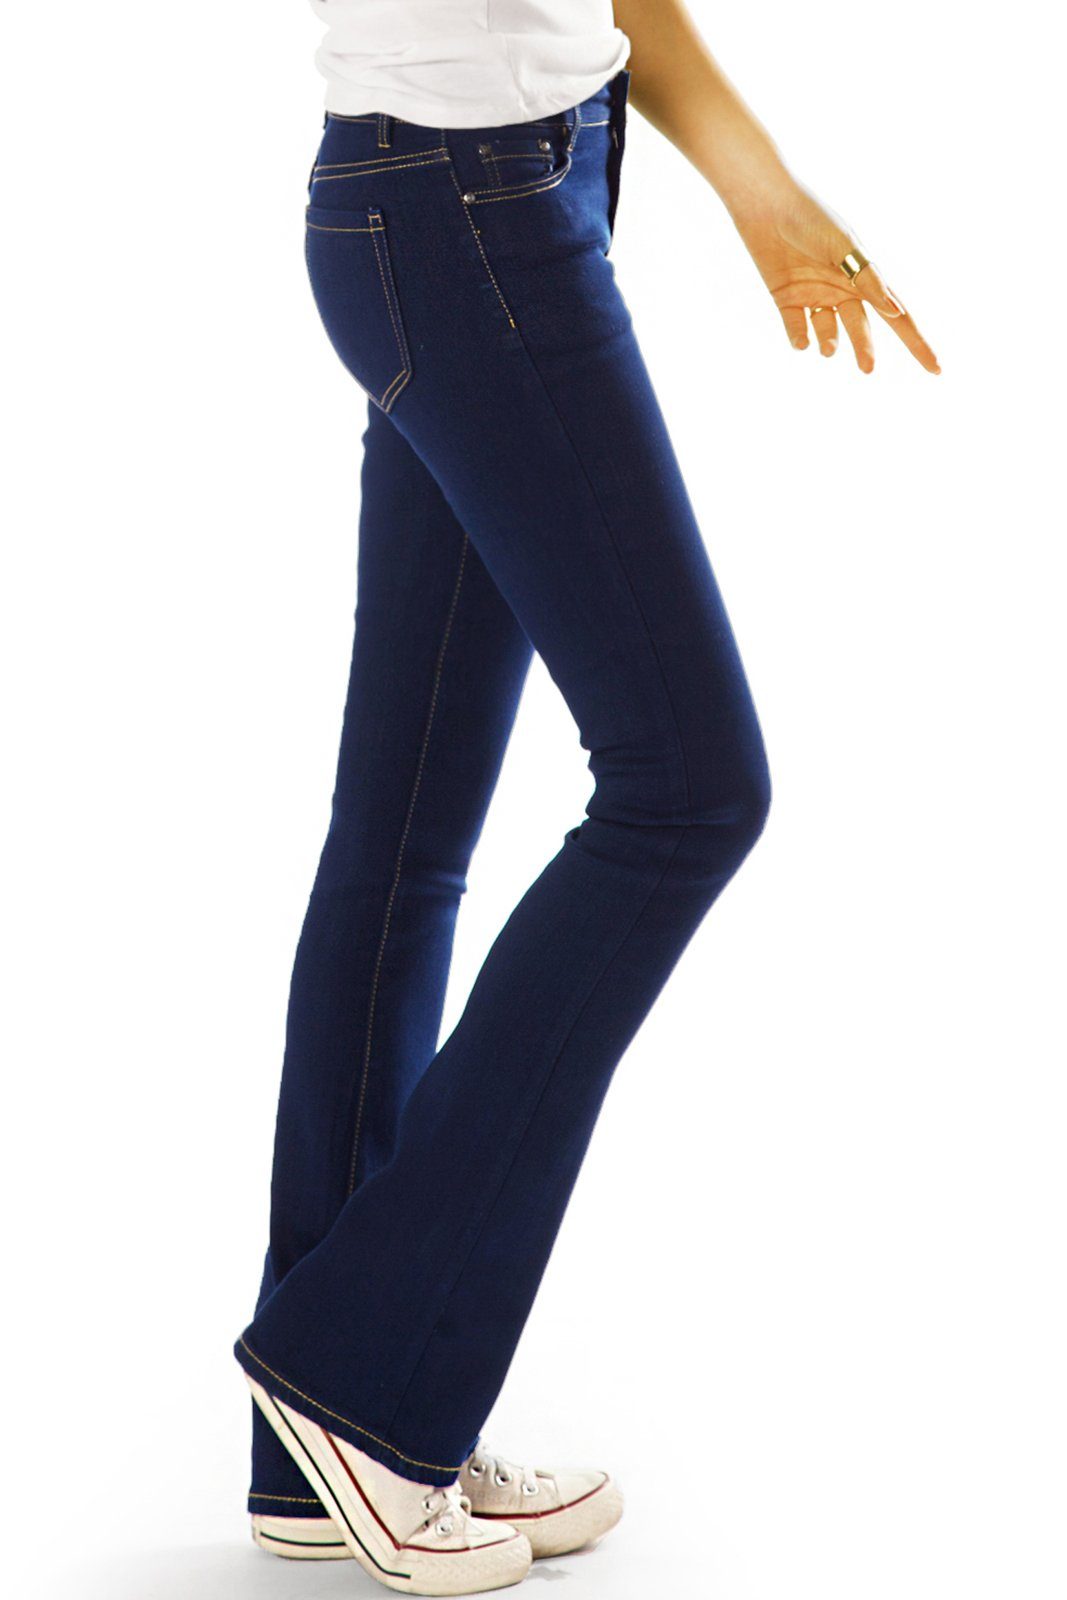 Hüftjeans Damen Stretchjeans Stretch-Anteil, Bootcut 5-Pocket-Style Jeanshose schwarz - be mit Bootcut-Jeans -j18g styled